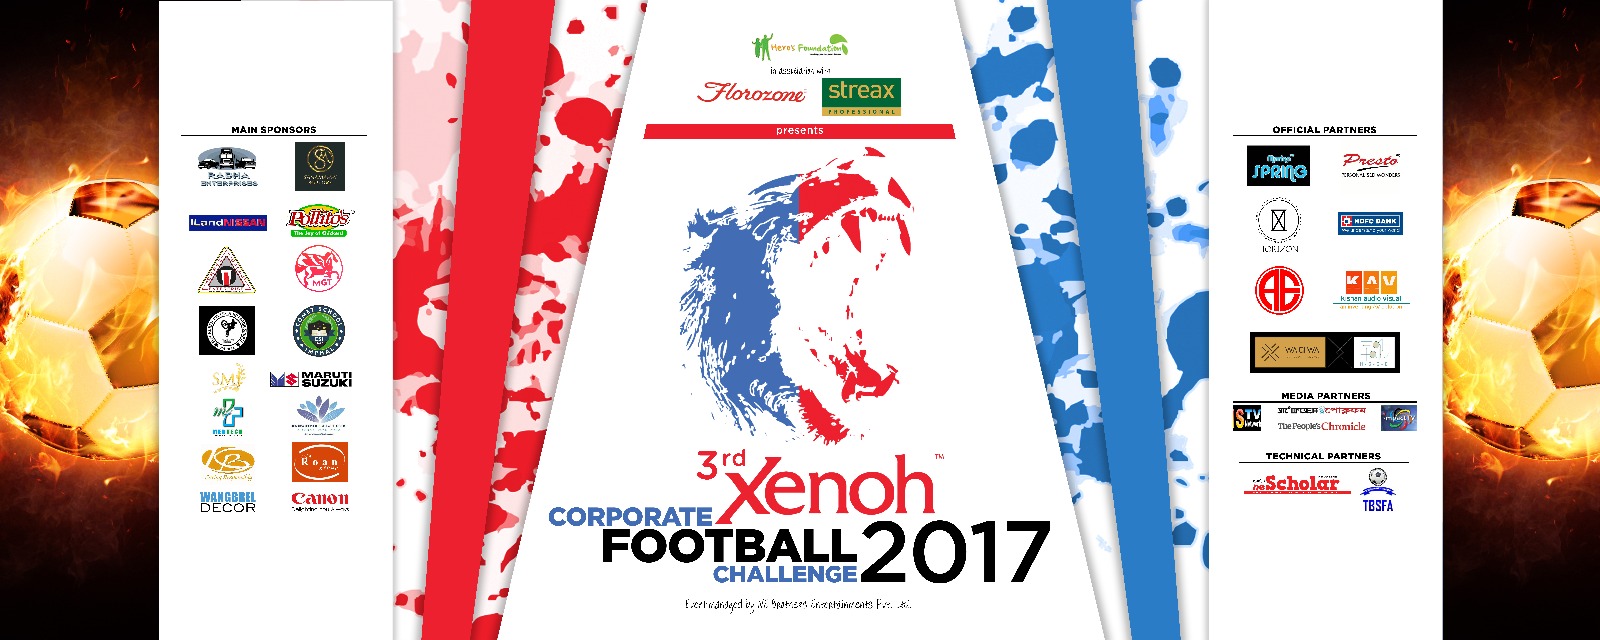 Xenoh Corporate Football Challenge 2017